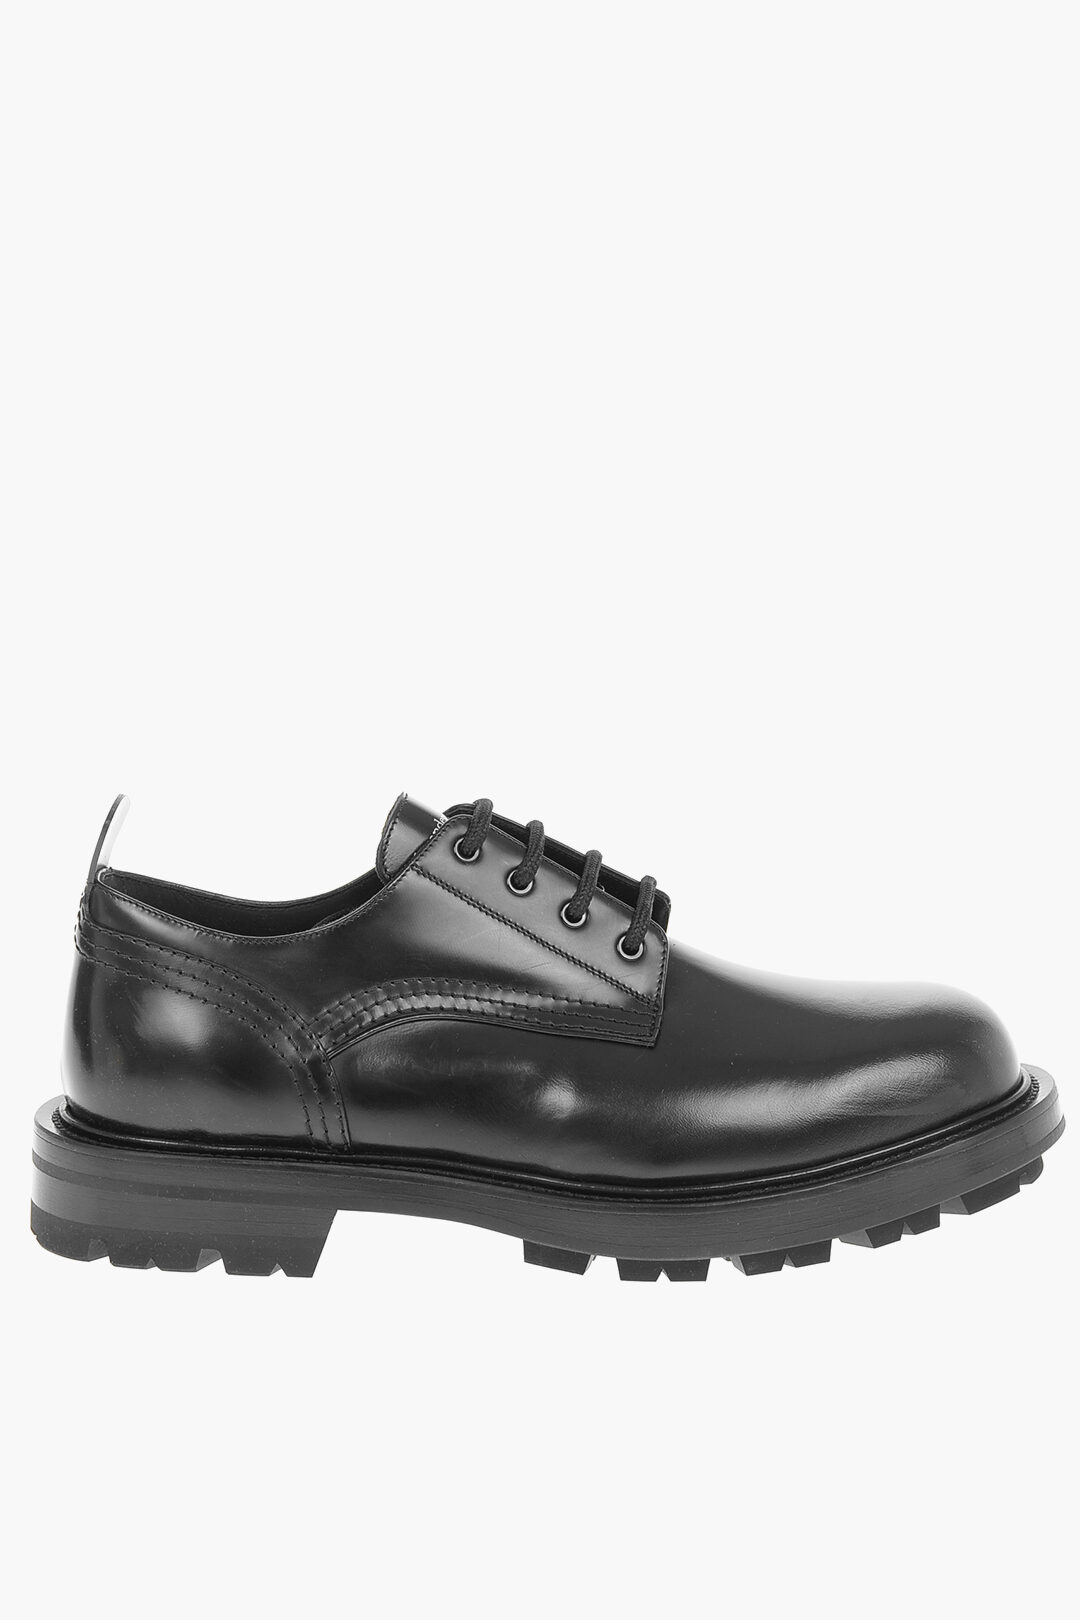 Alexander McQueen Carrion Sole SHINY LIQUID Leather Derby Shoes men ...